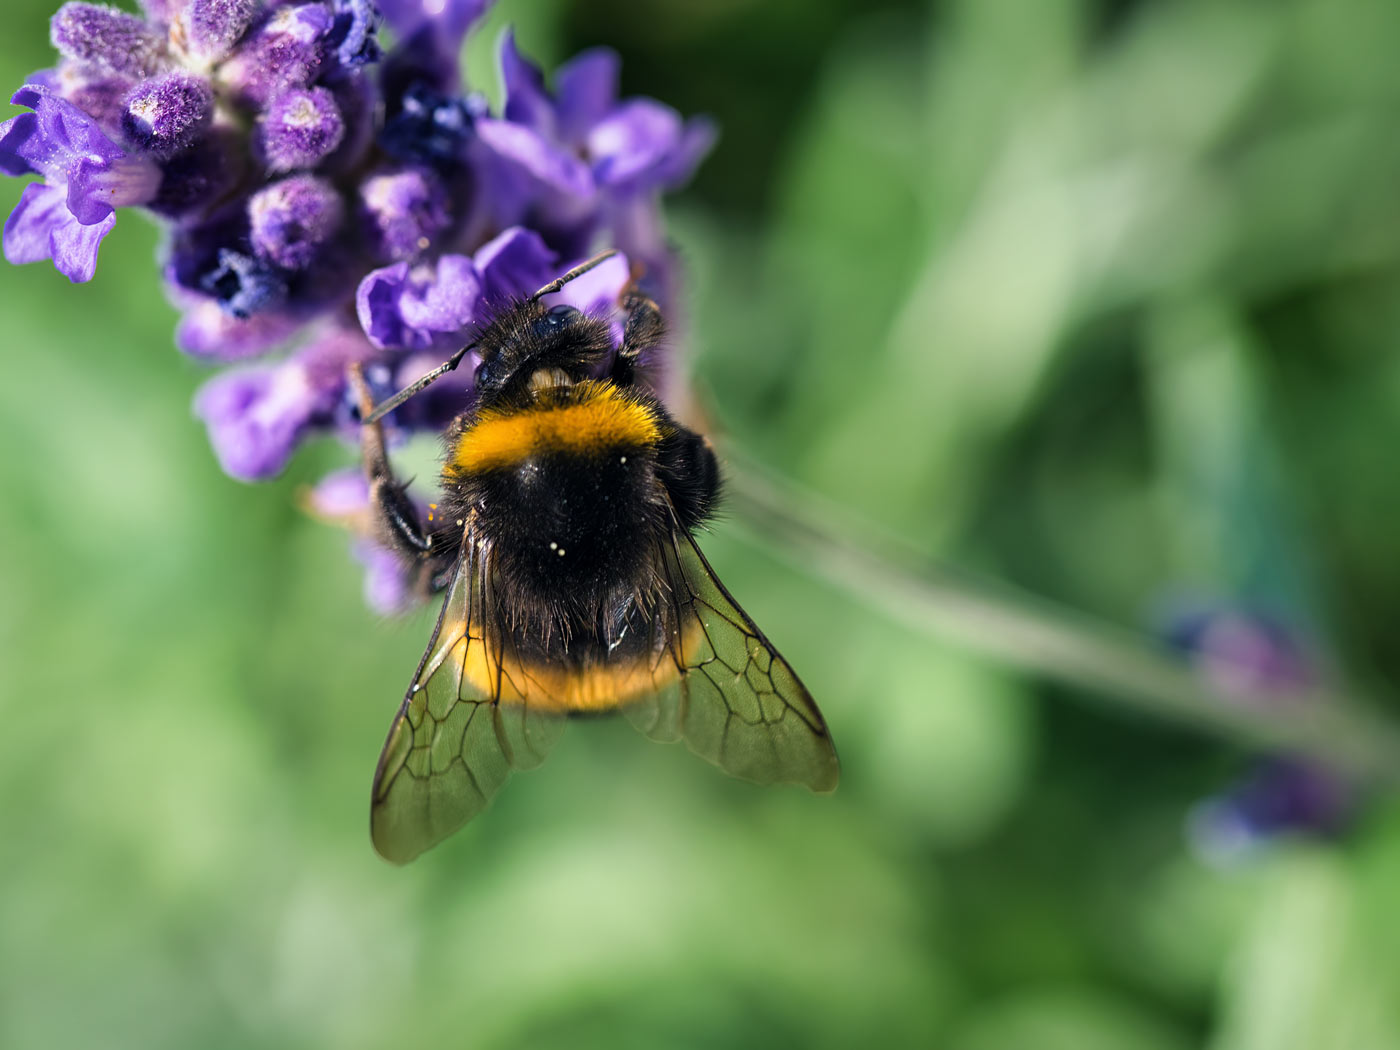 Straw Pollinators for your garden